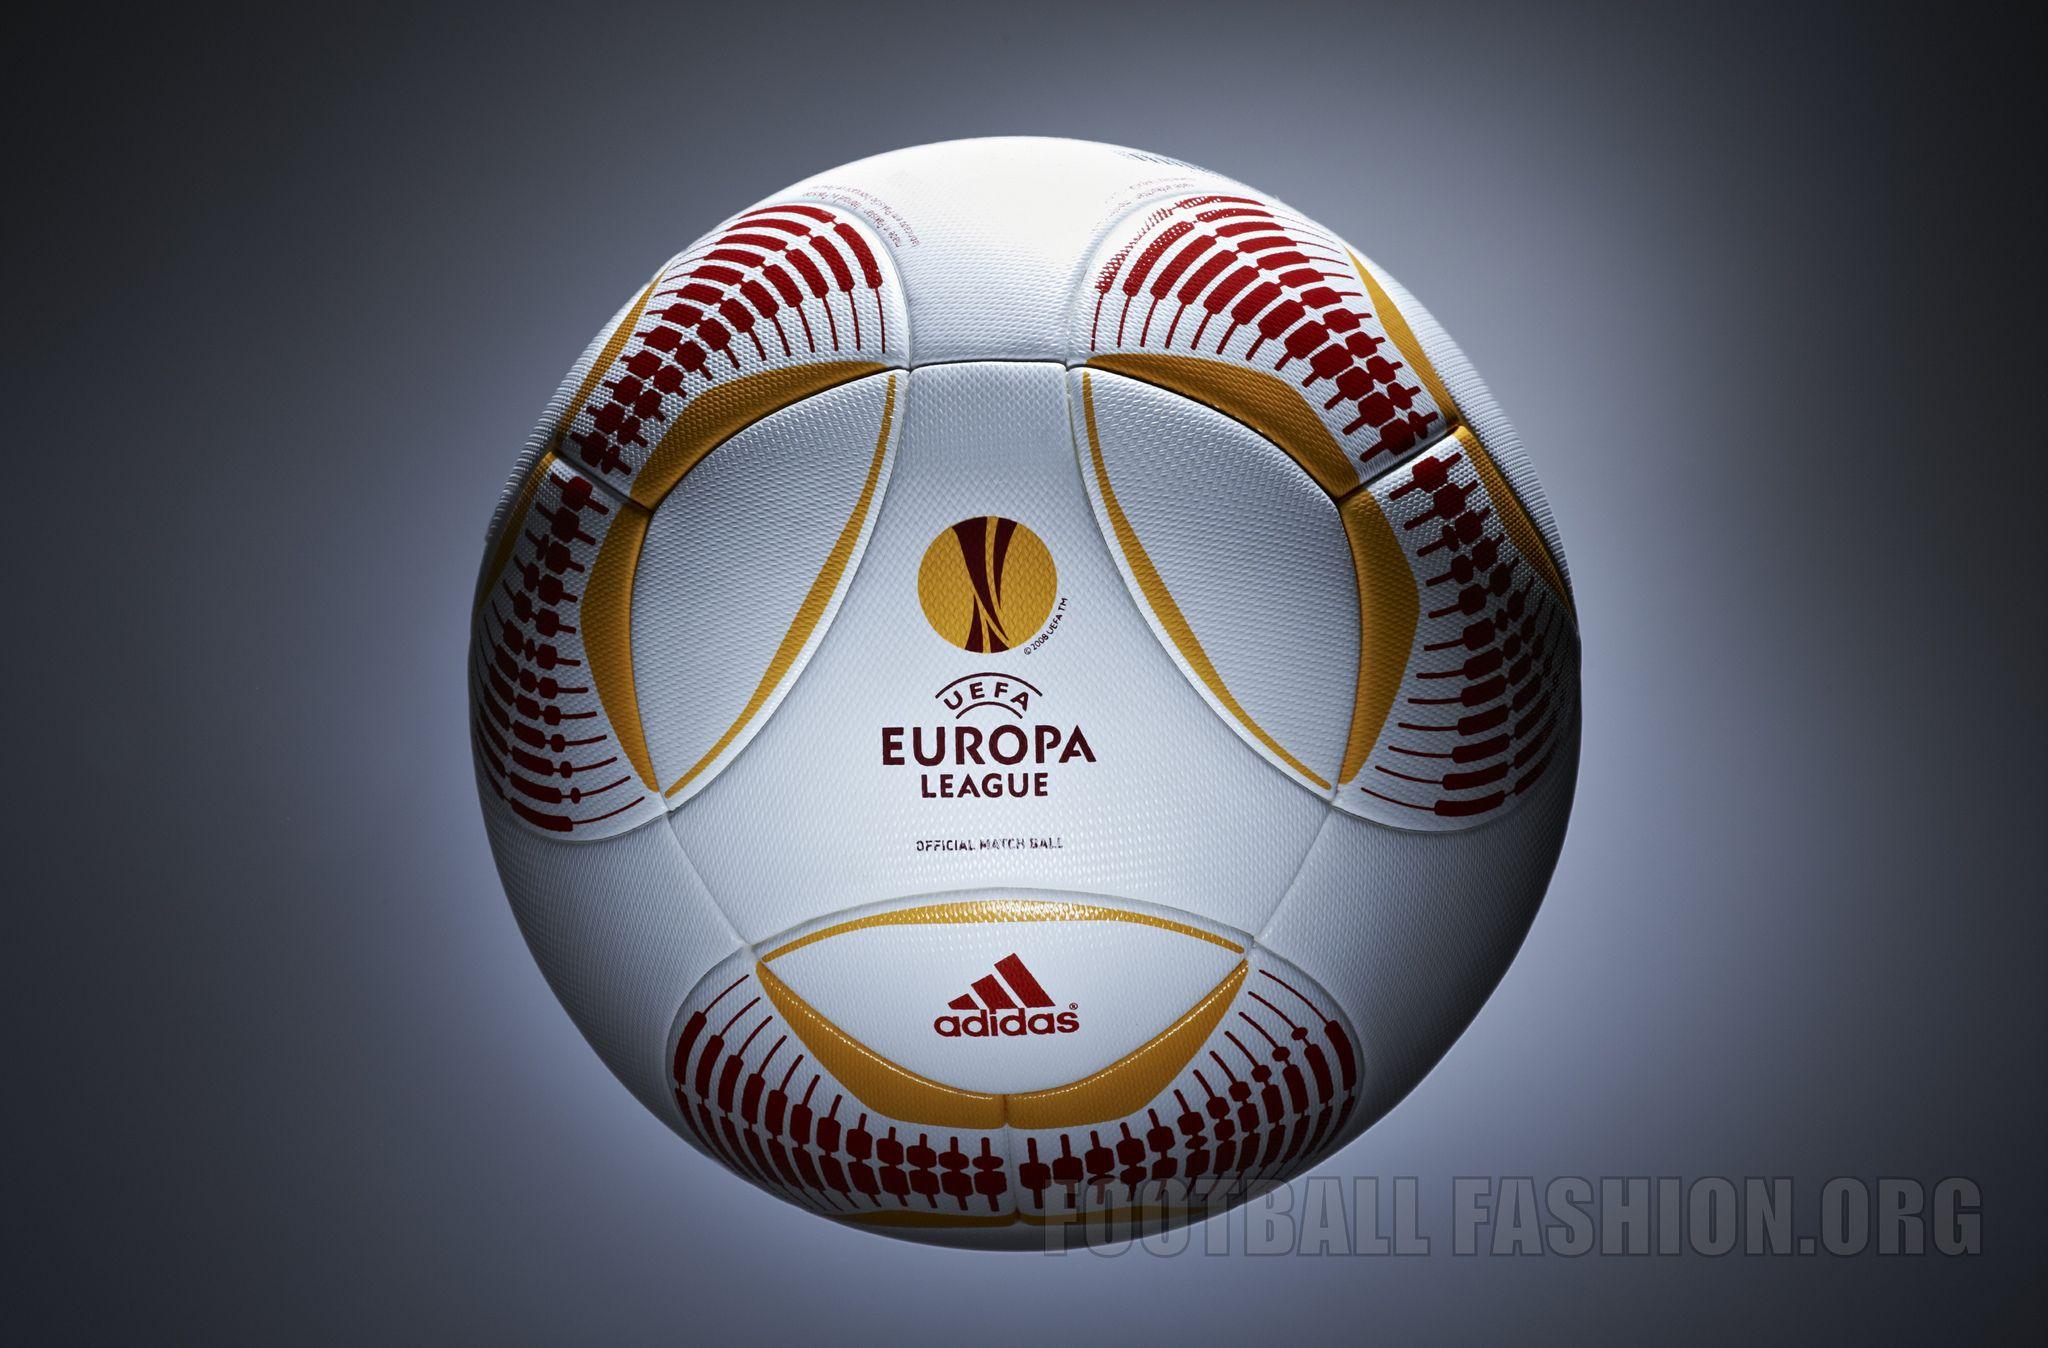 Uefa Europa League Ball (id: 89559)